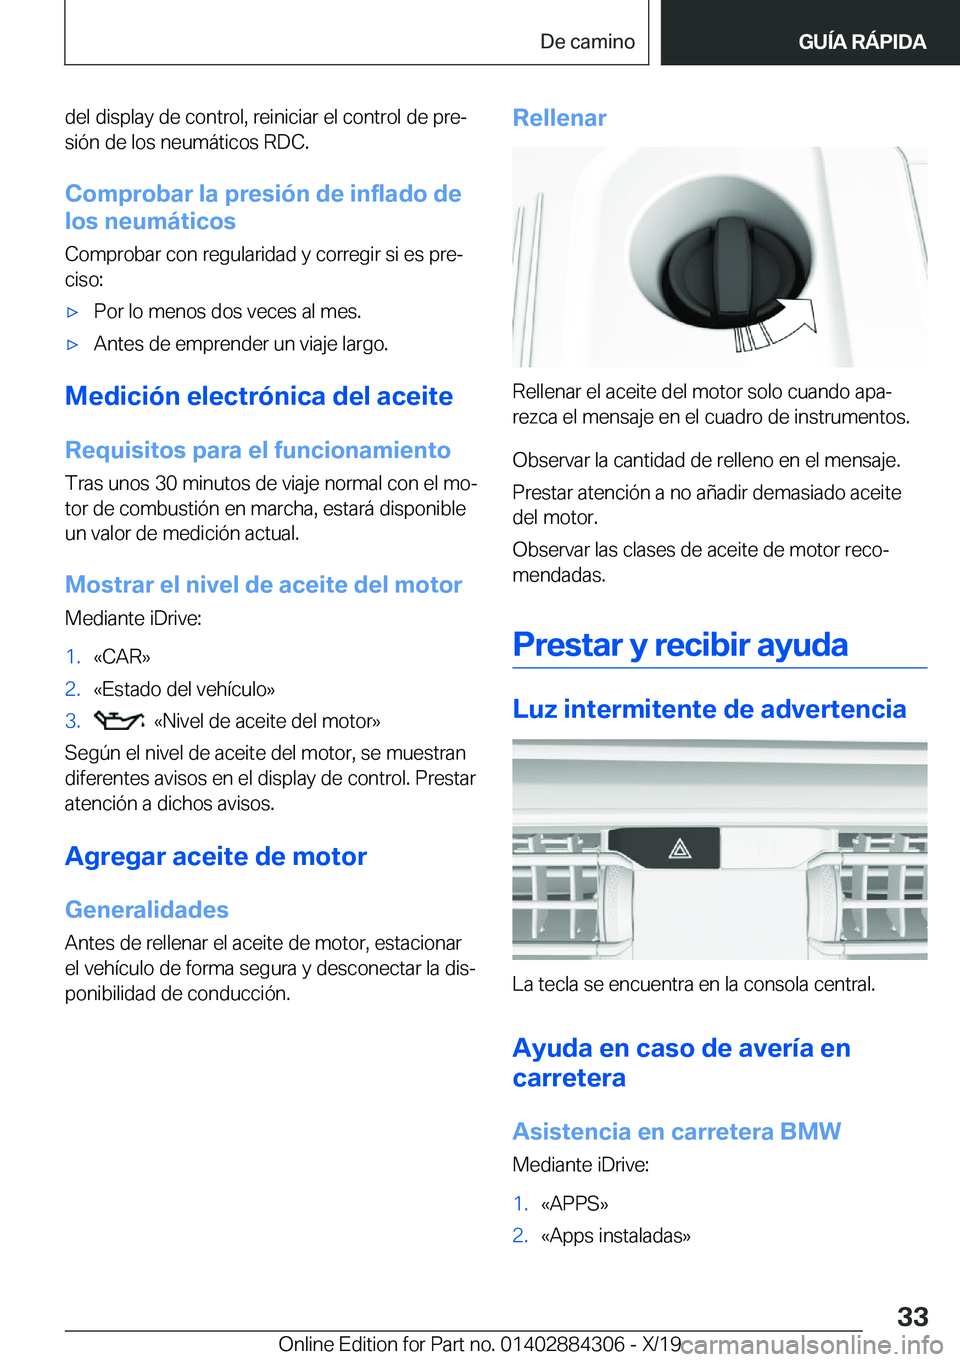 BMW 8 SERIES GRAN COUPE 2020  Manuales de Empleo (in Spanish) �d�e�l��d�i�s�p�l�a�y��d�e��c�o�n�t�r�o�l�,��r�e�i�n�i�c�i�a�r��e�l��c�o�n�t�r�o�l��d�e��p�r�eª�s�i�